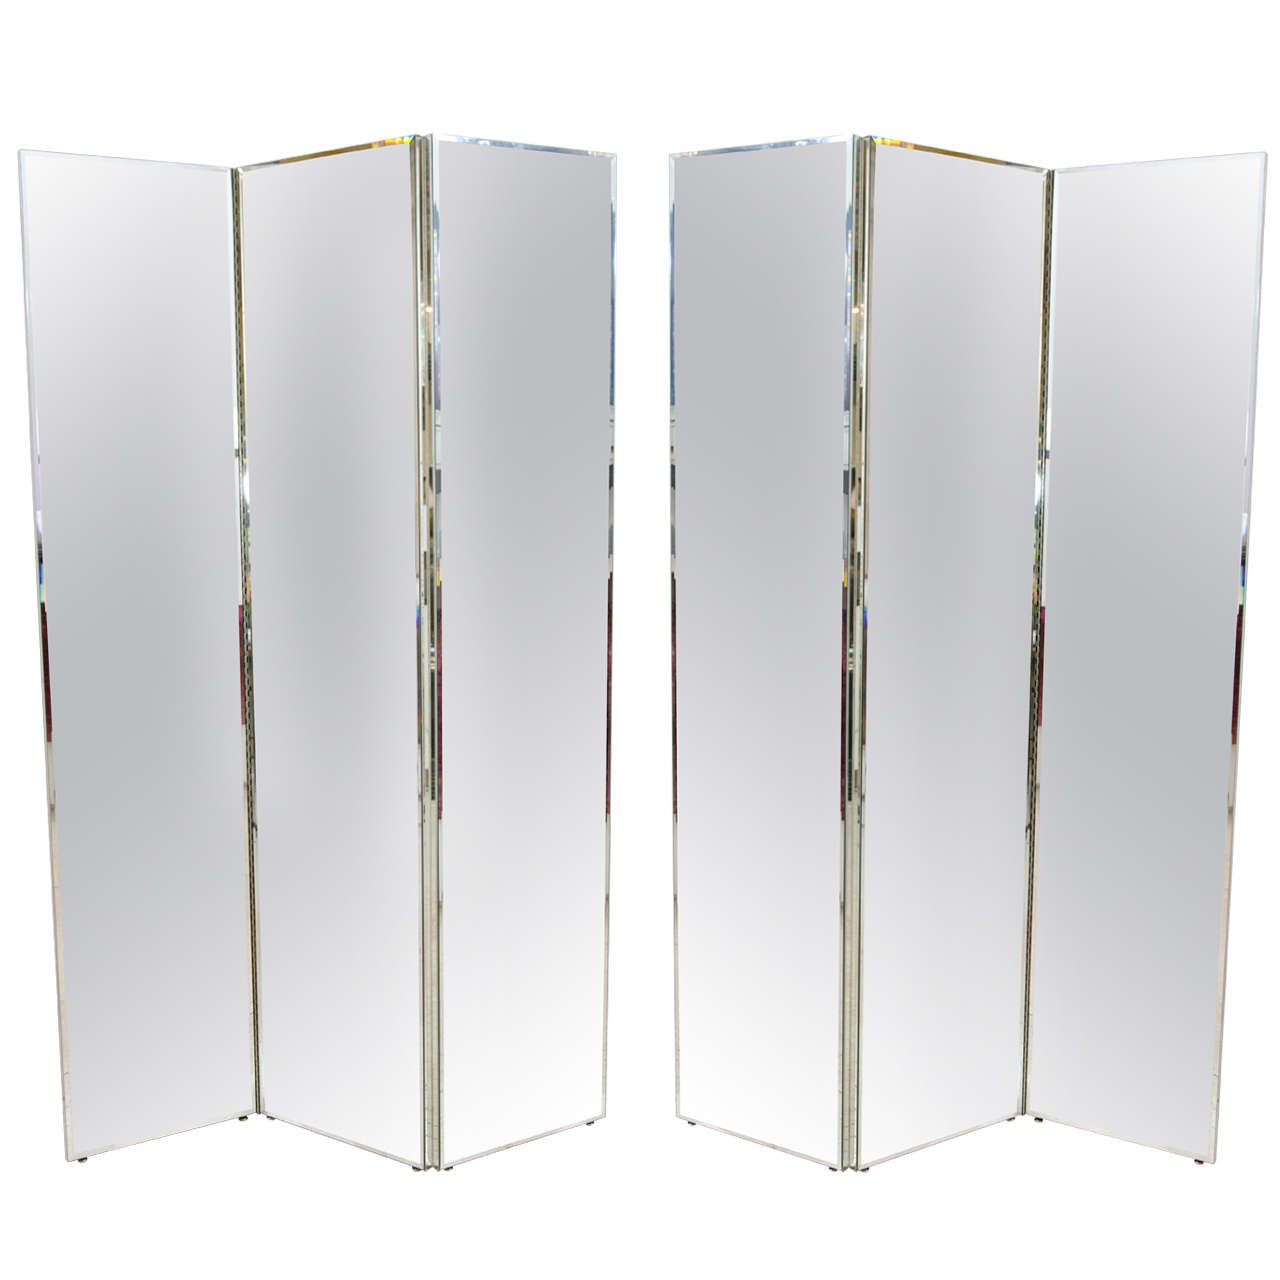 Pair of Mirrored Screens or Room Dividers